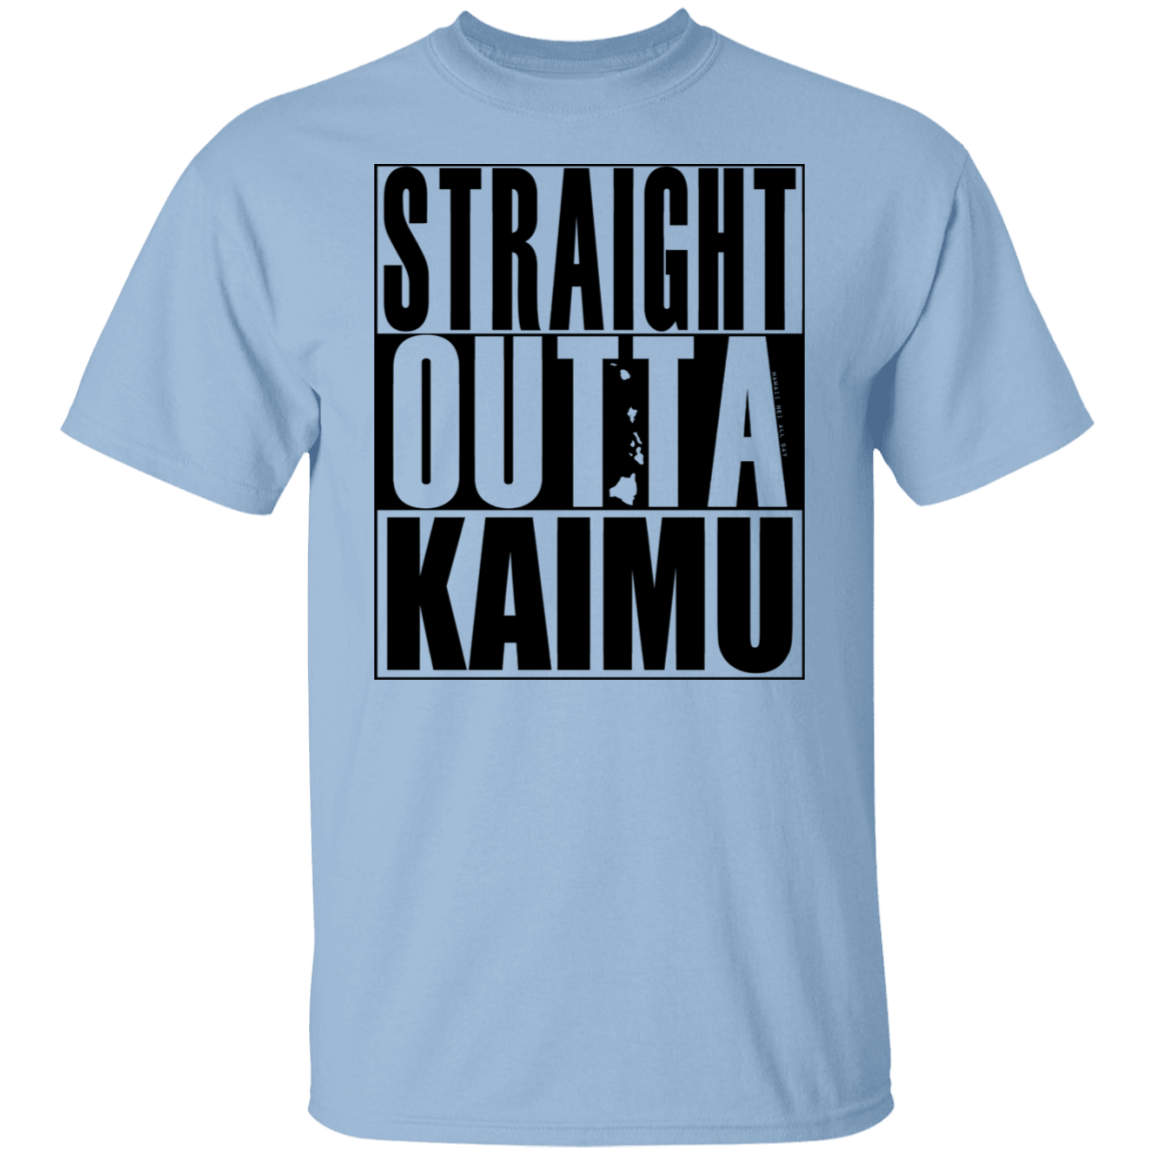 Straight Outta Kaimu(black ink) T-Shirt